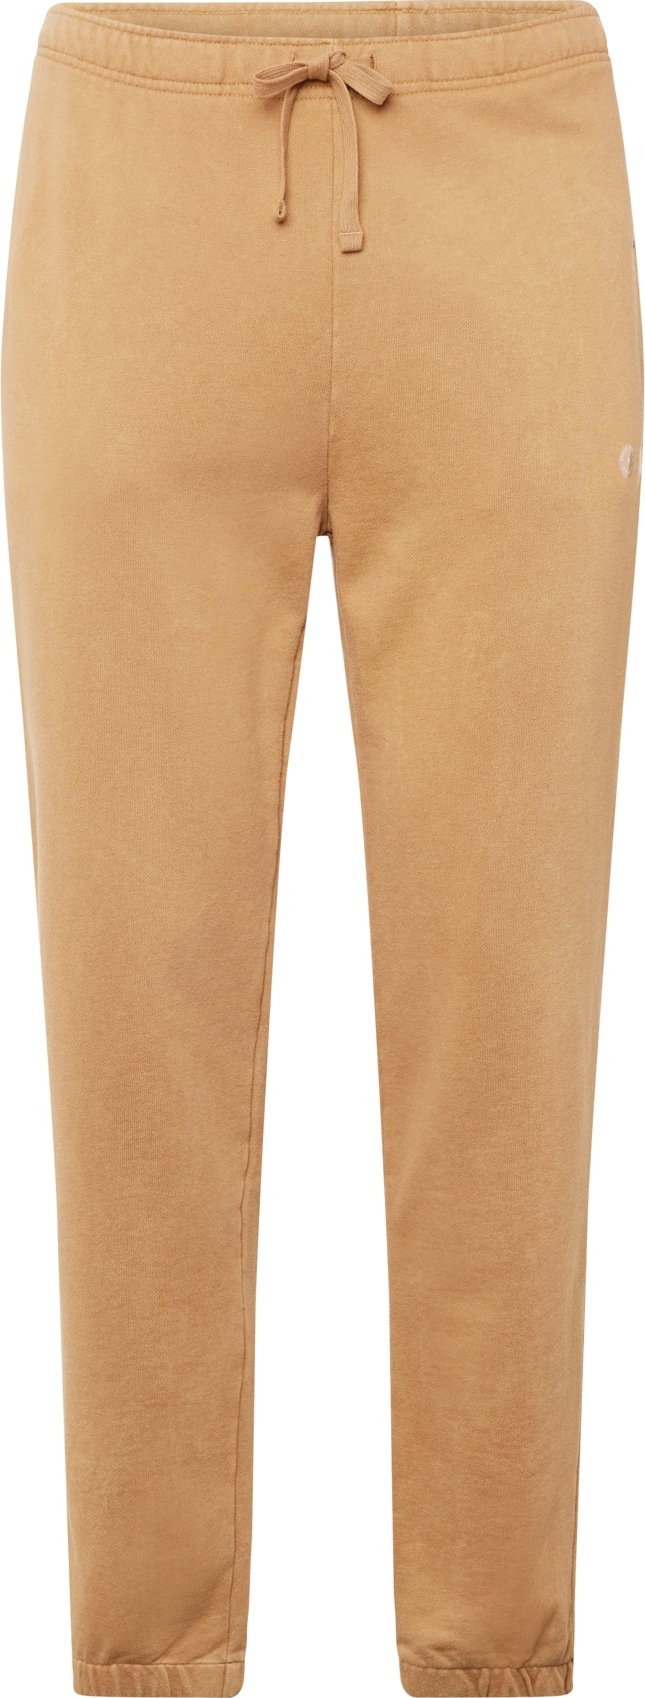 Kalhoty Polo Ralph Lauren světle hnědá